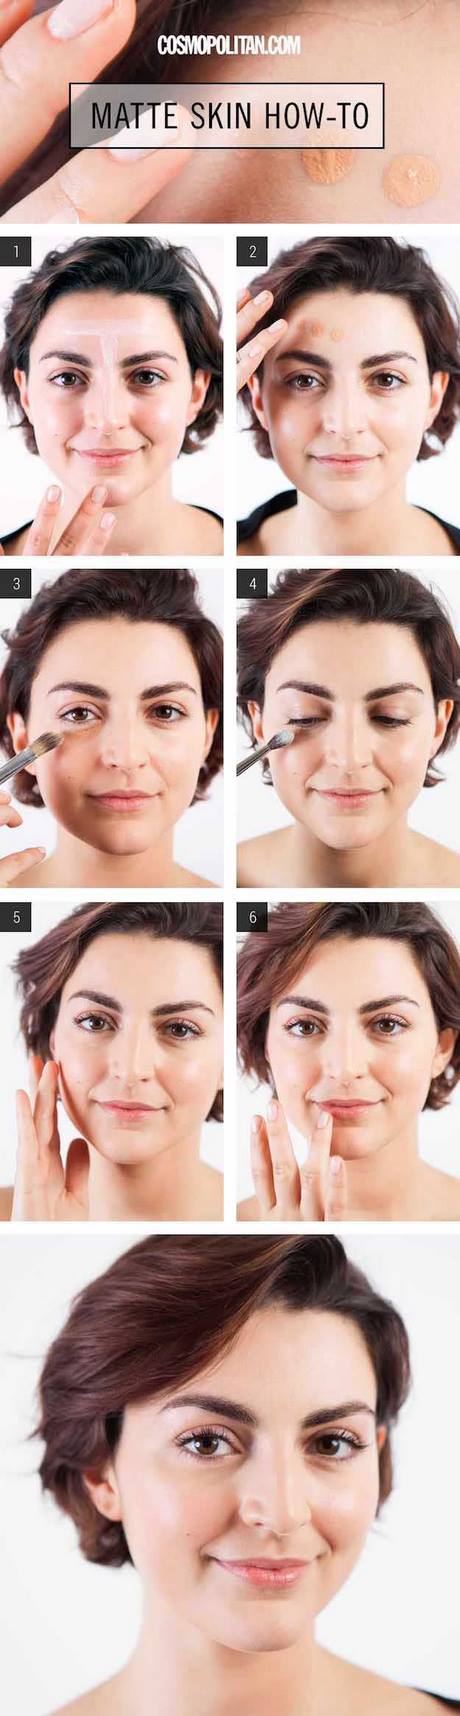 tutorial-on-makeup-65_7 Les over make-up